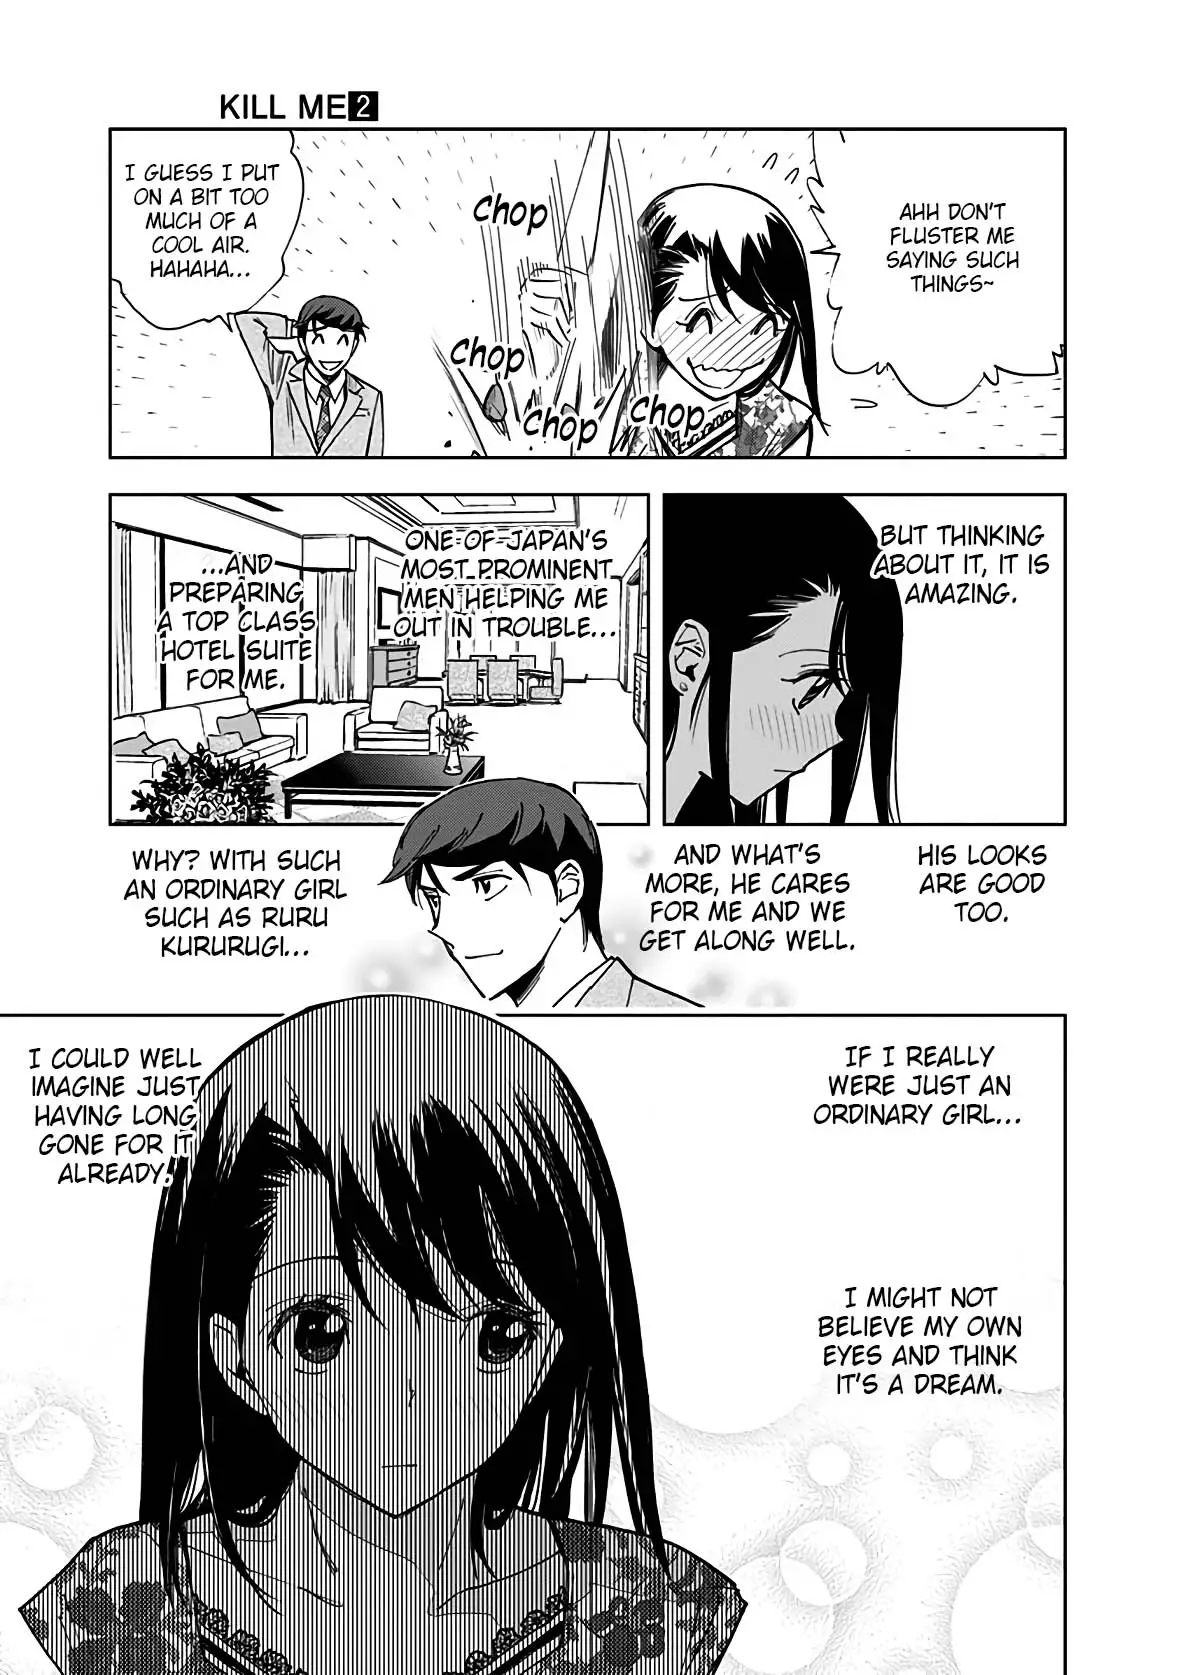 Kiruru Kill Me - 18 page 9